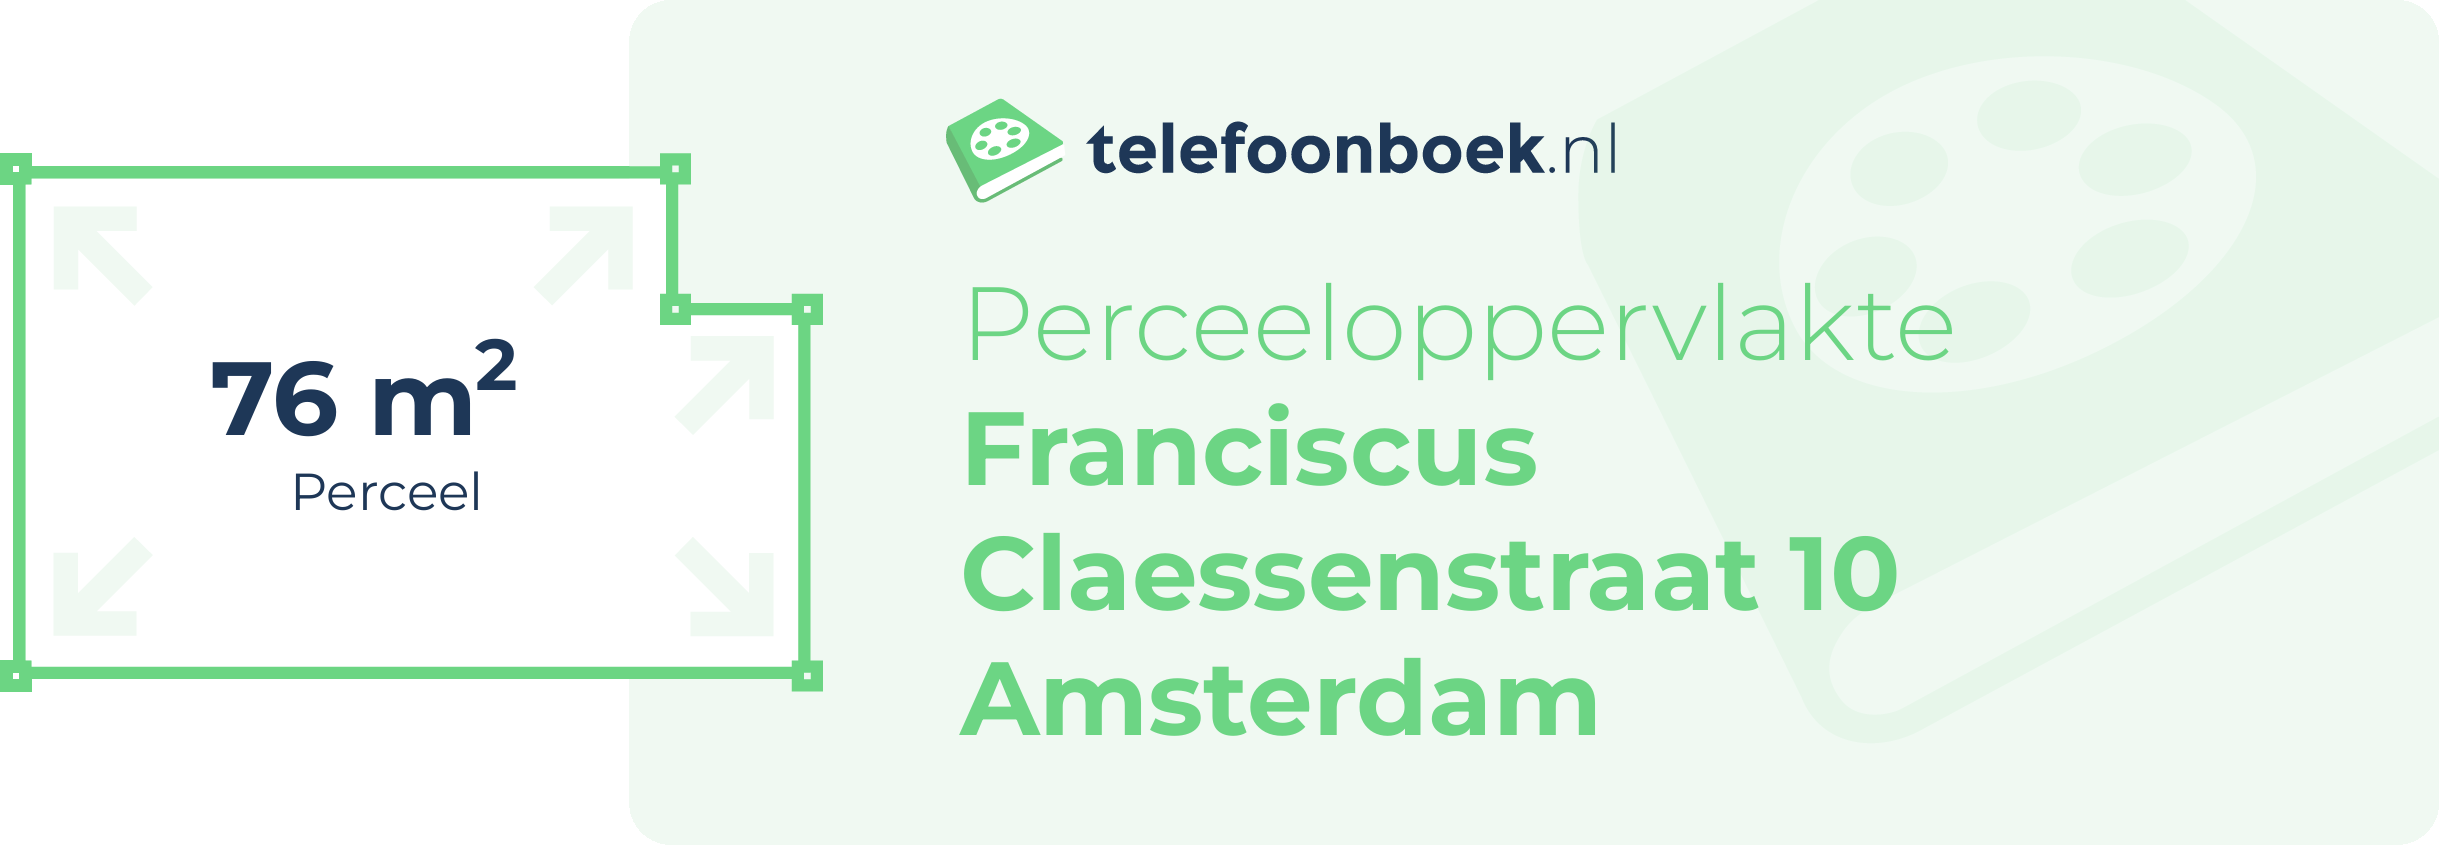 Perceeloppervlakte Franciscus Claessenstraat 10 Amsterdam